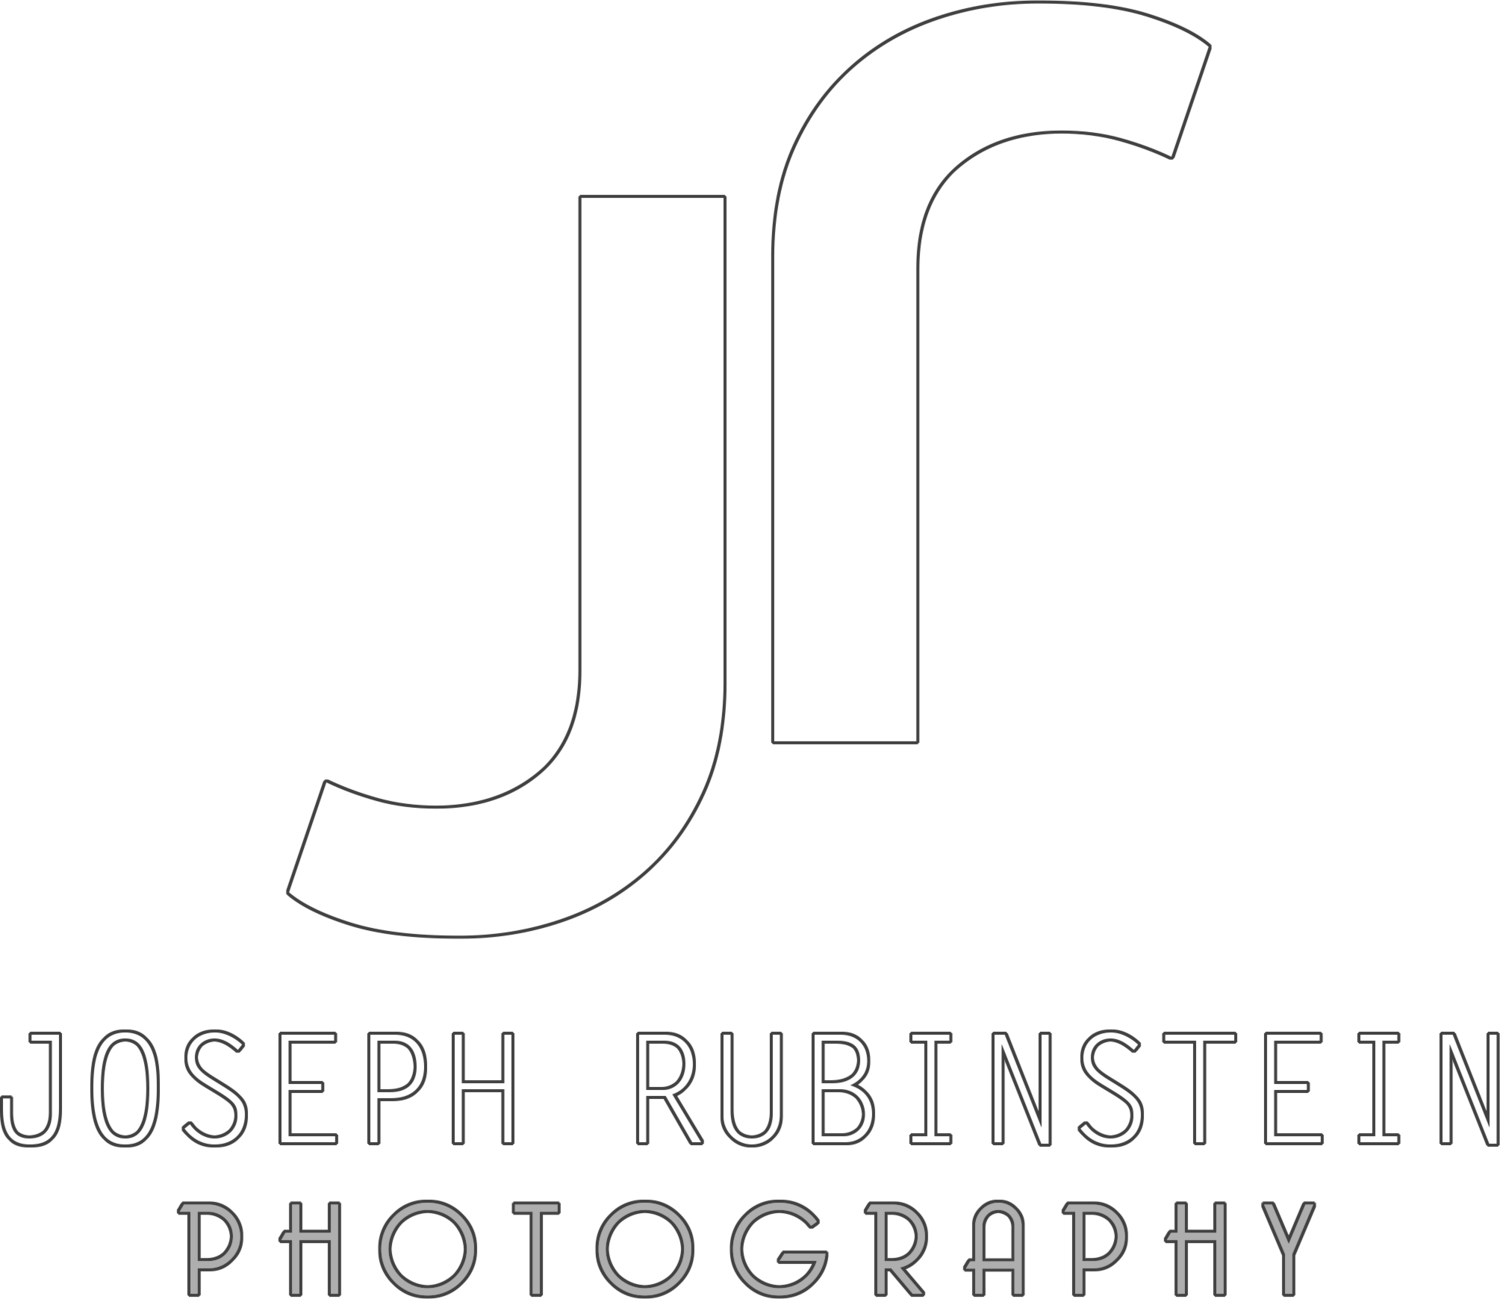 Joseph Rubinstein Photography